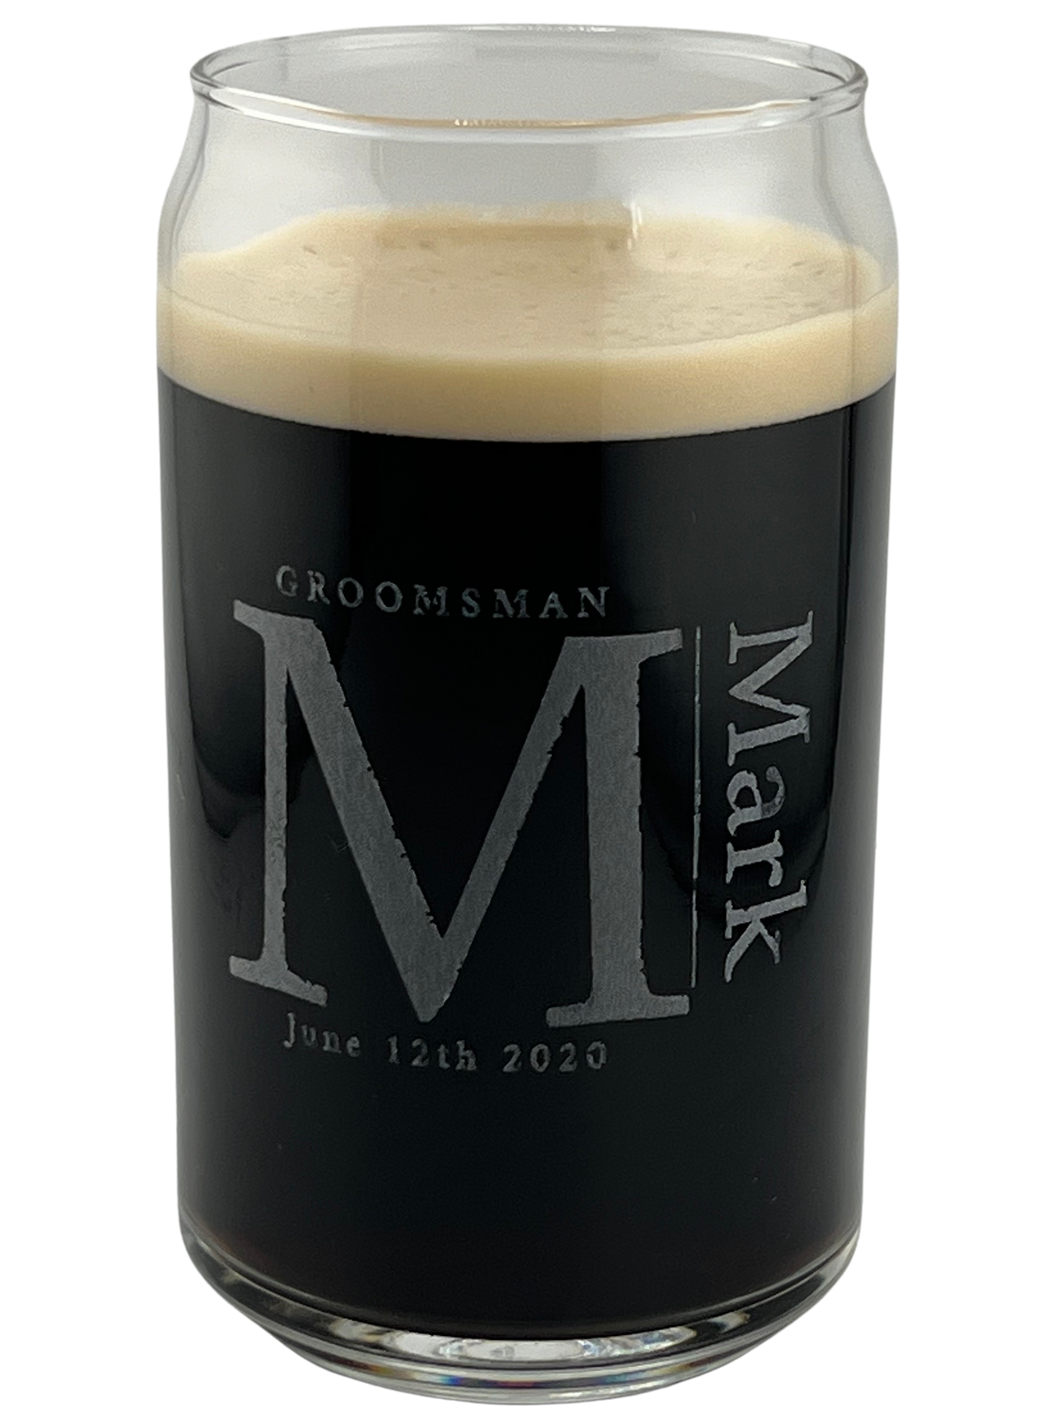 Groomsman Personalized Beer Glass